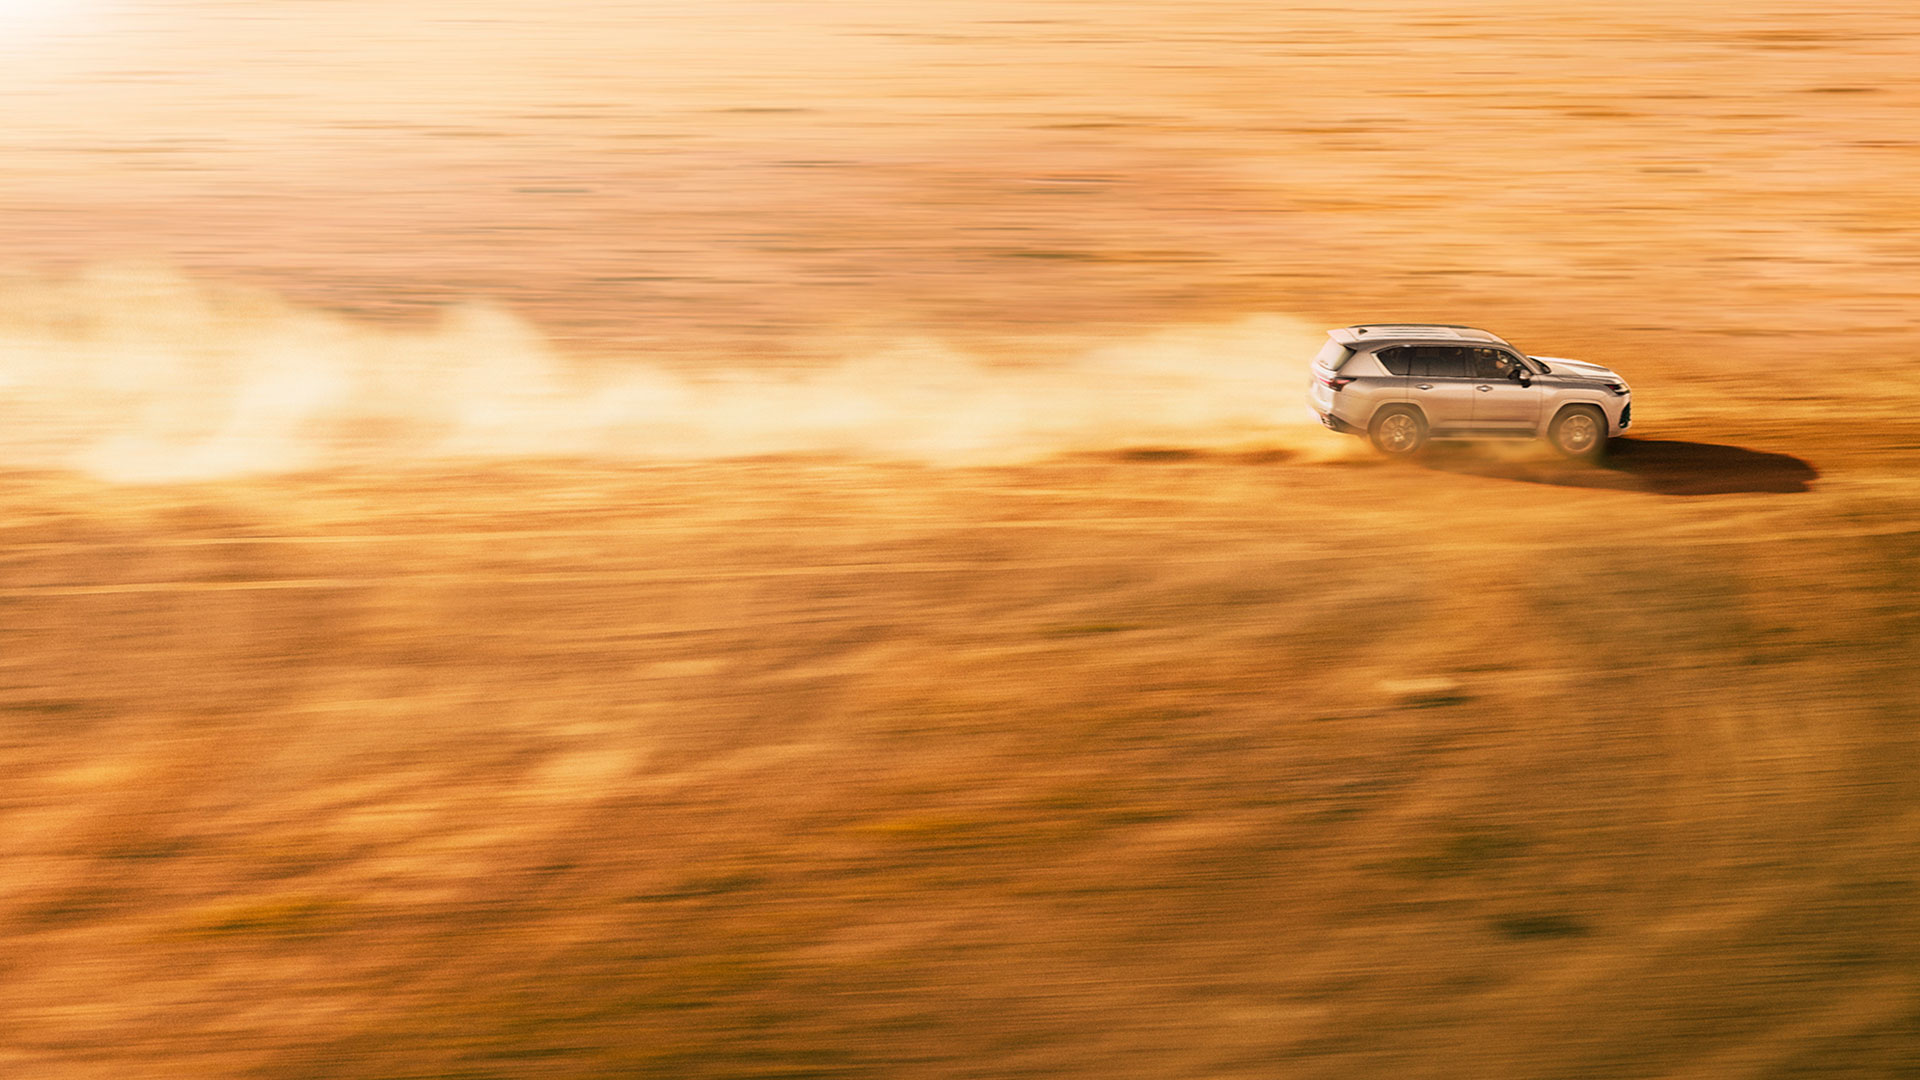 Lexus LX driving through a desert with a dust cloud billowing behind it